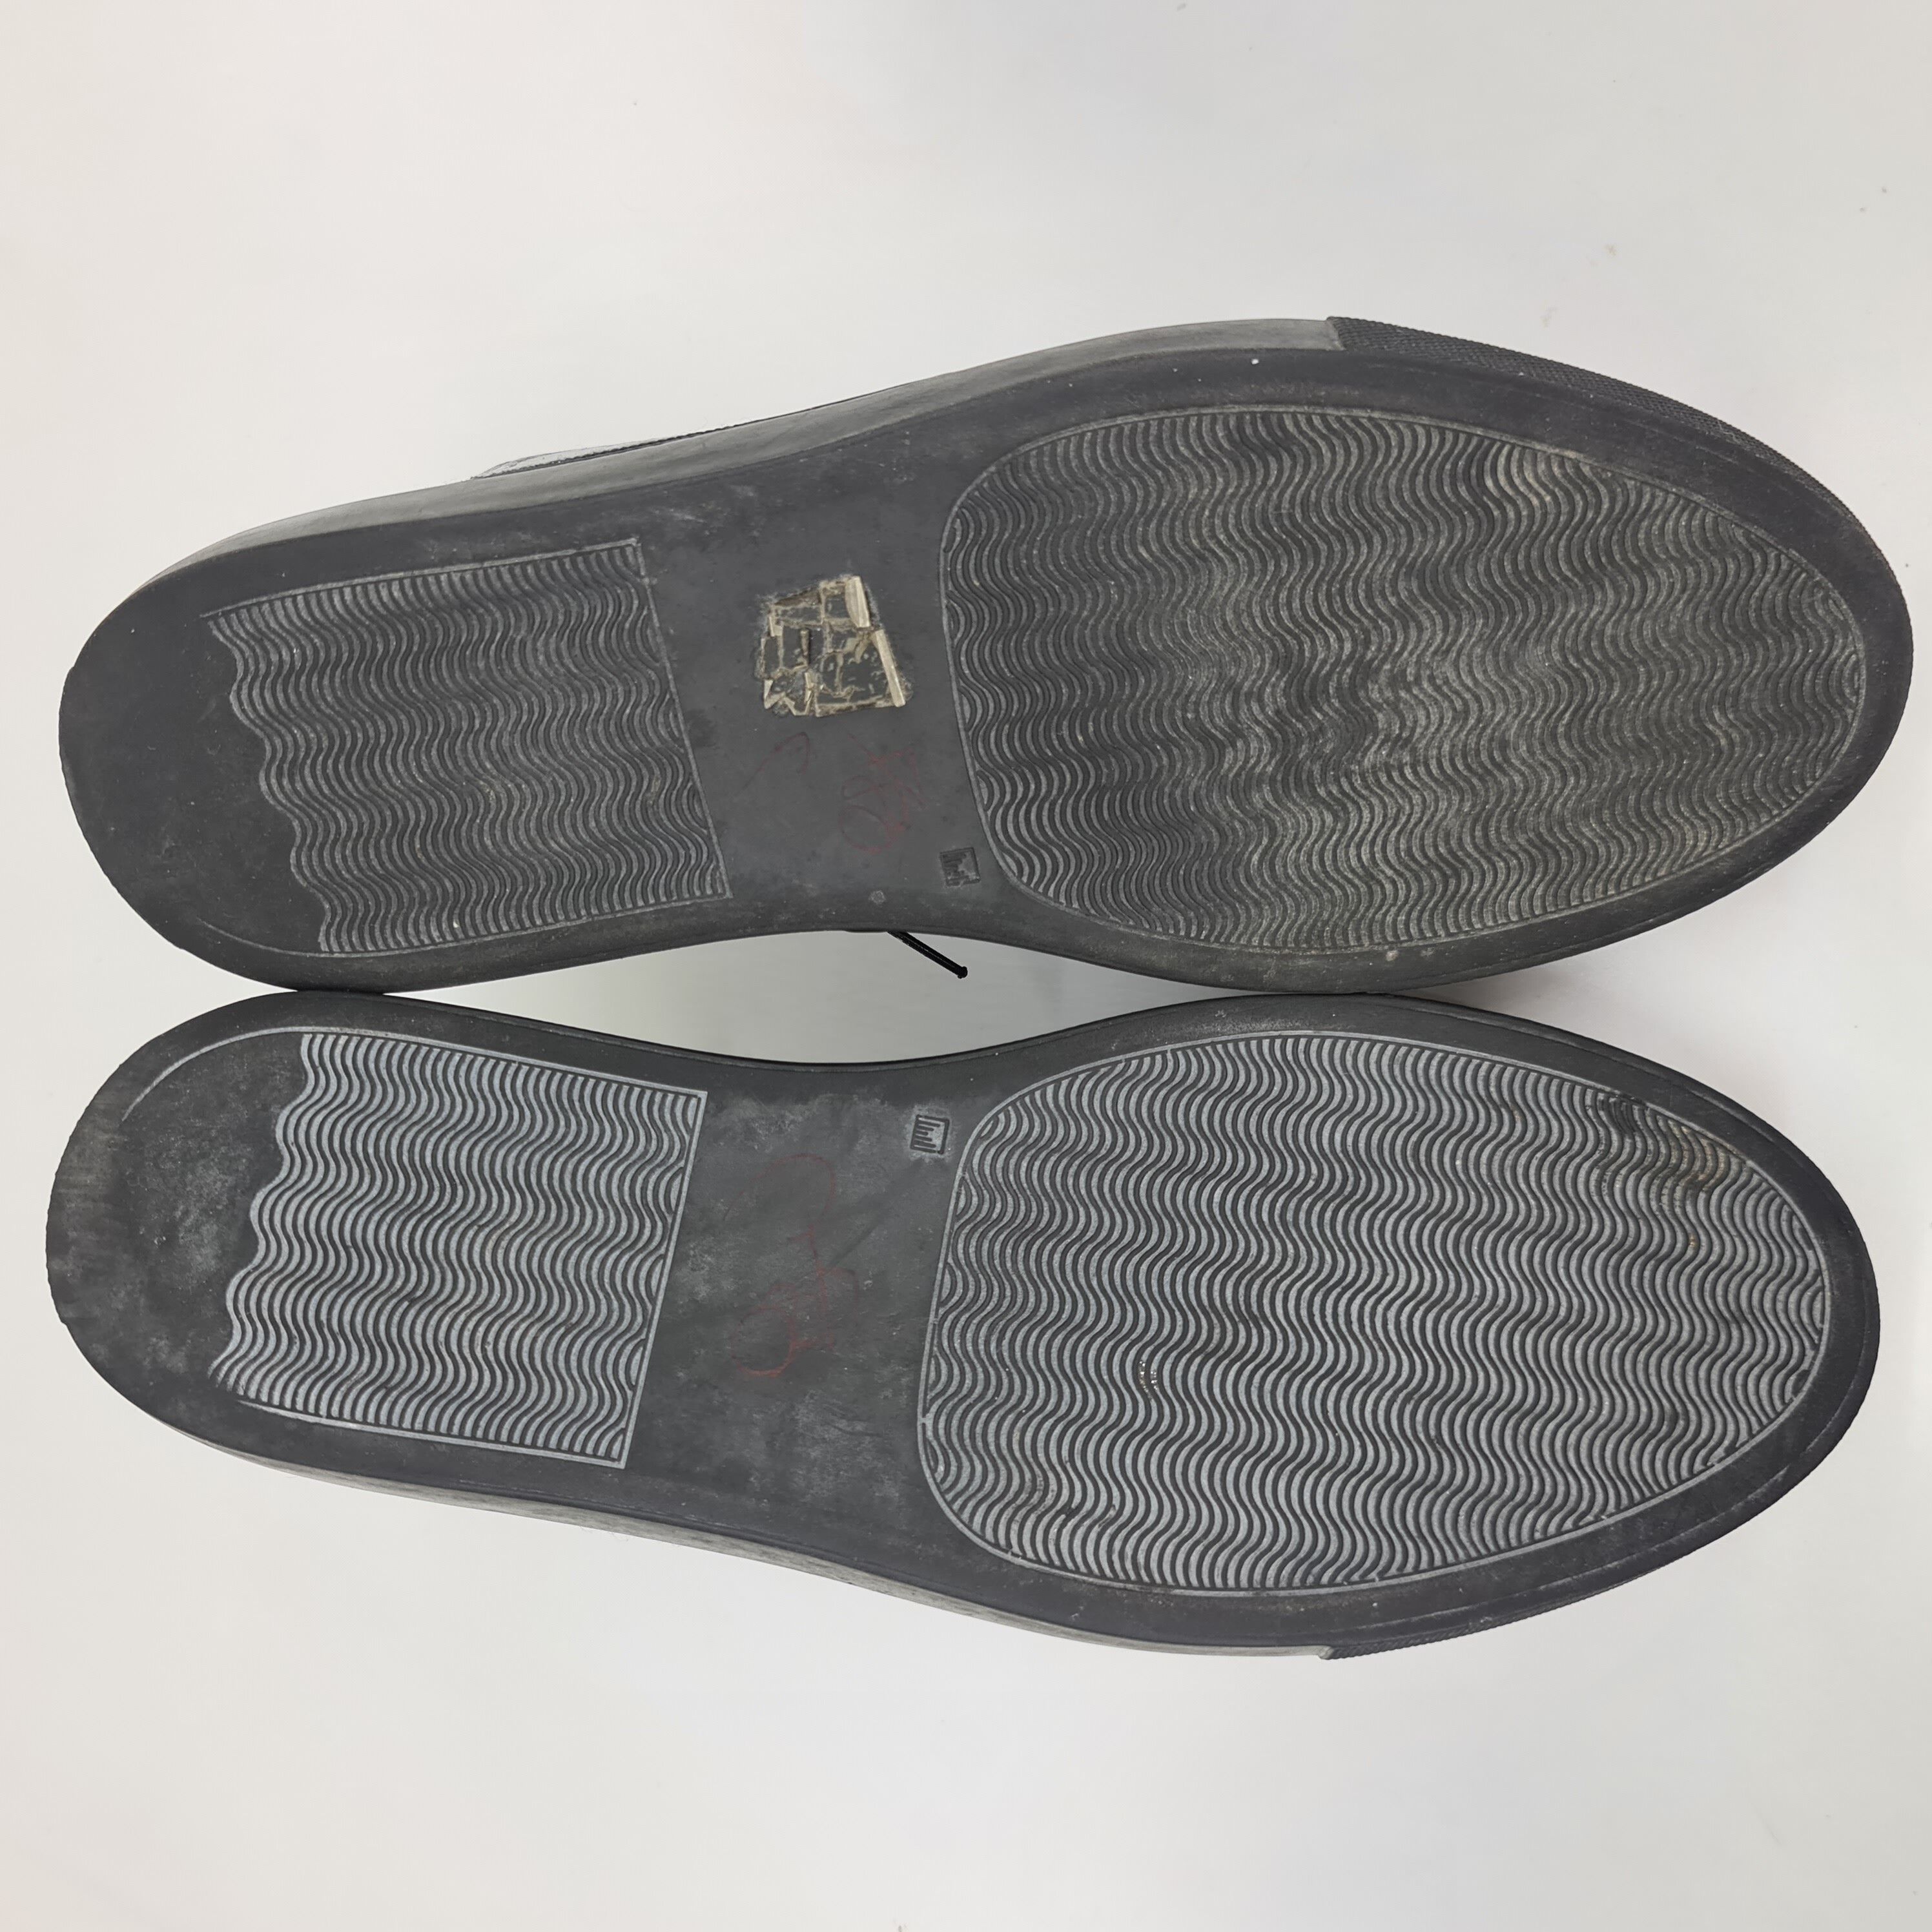 Raf Simons - SS09 Archive Zip Change Transformer Sneakers - 8